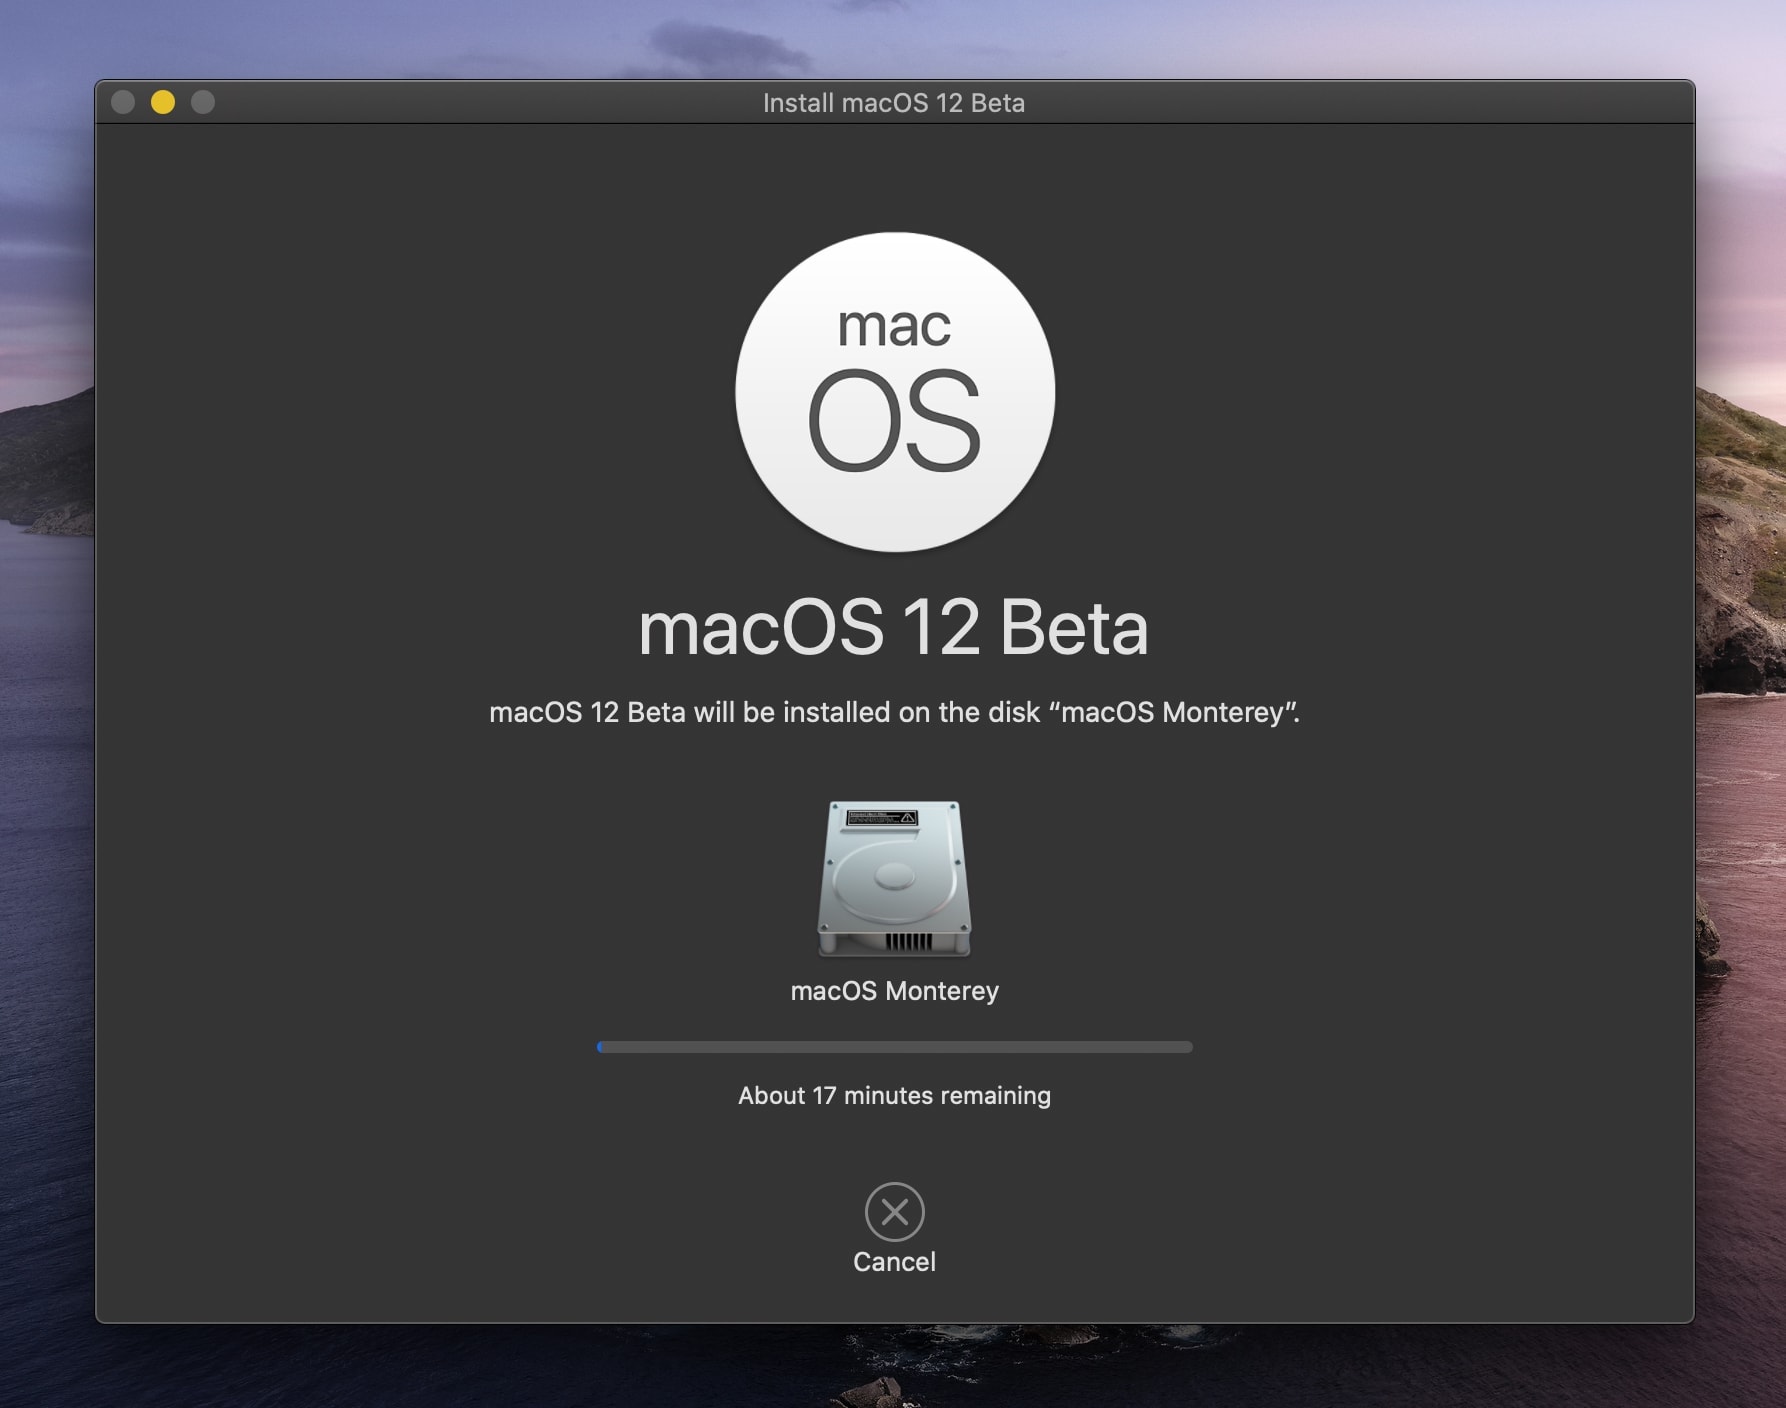 installing windows on mac book clean install